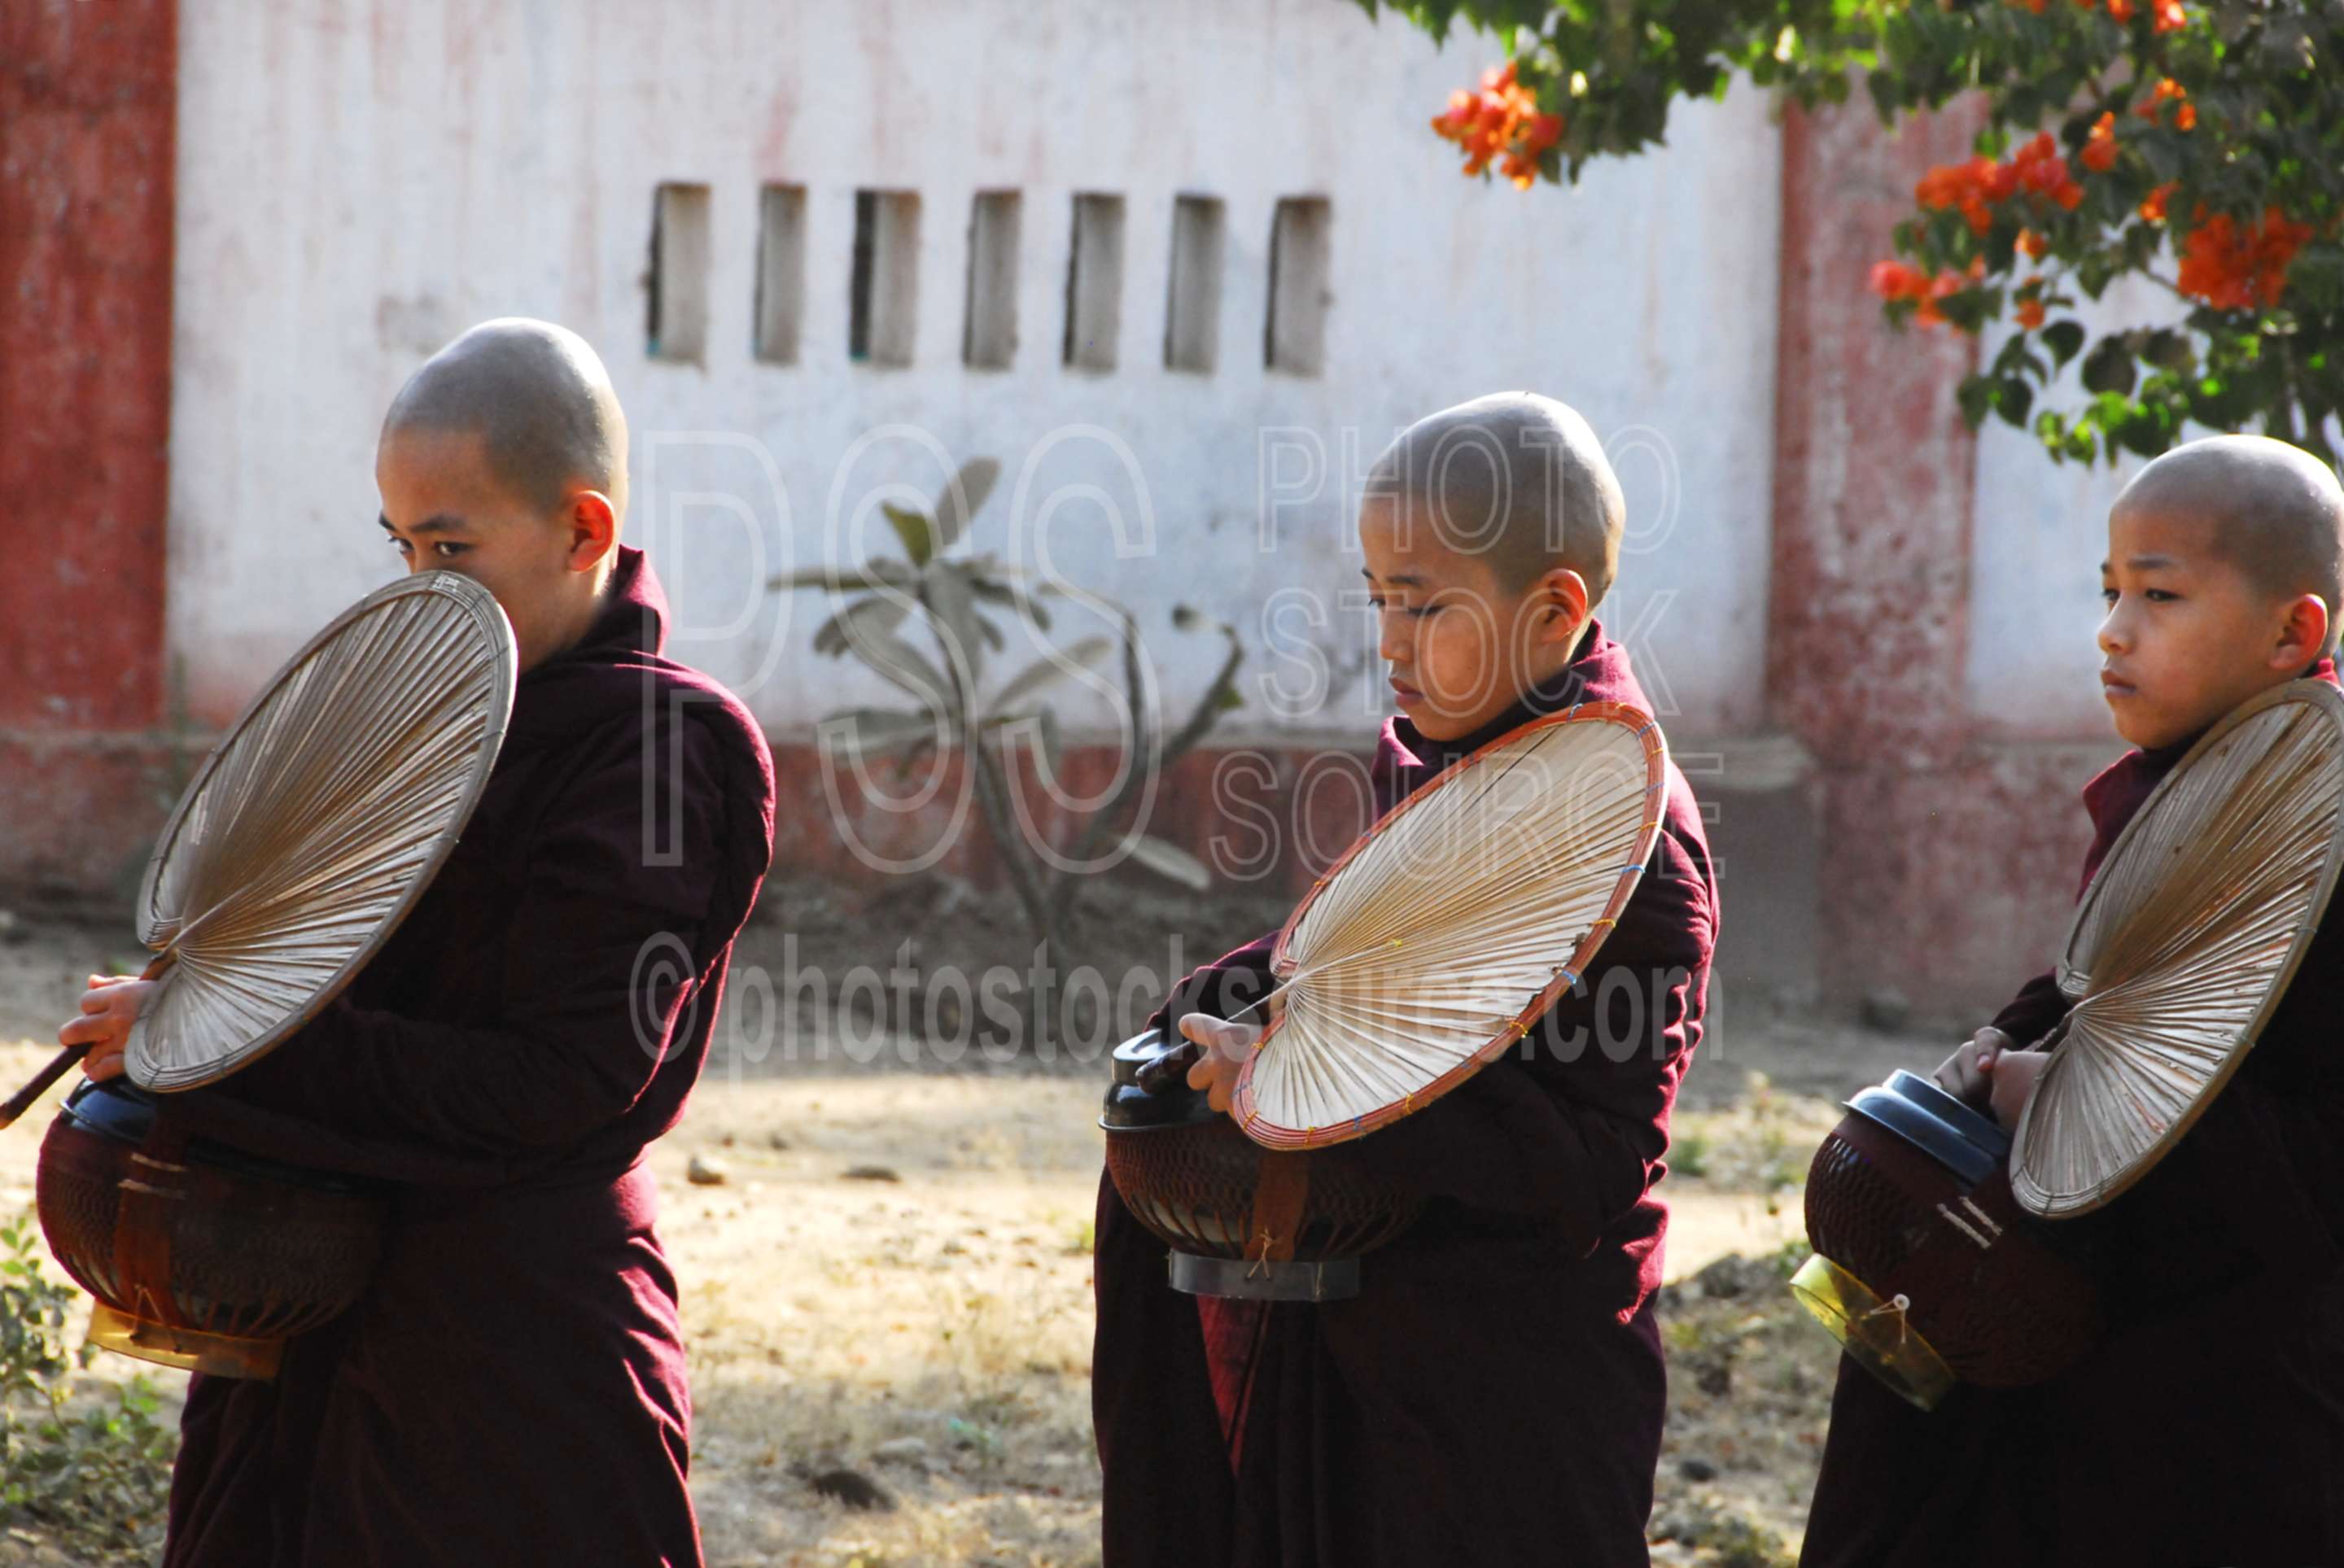 Monks Gathering Alms,myanmar,monks,devotion,alms,gathering,marching,walking,fans,praying,religious,buddhiist,buddhism